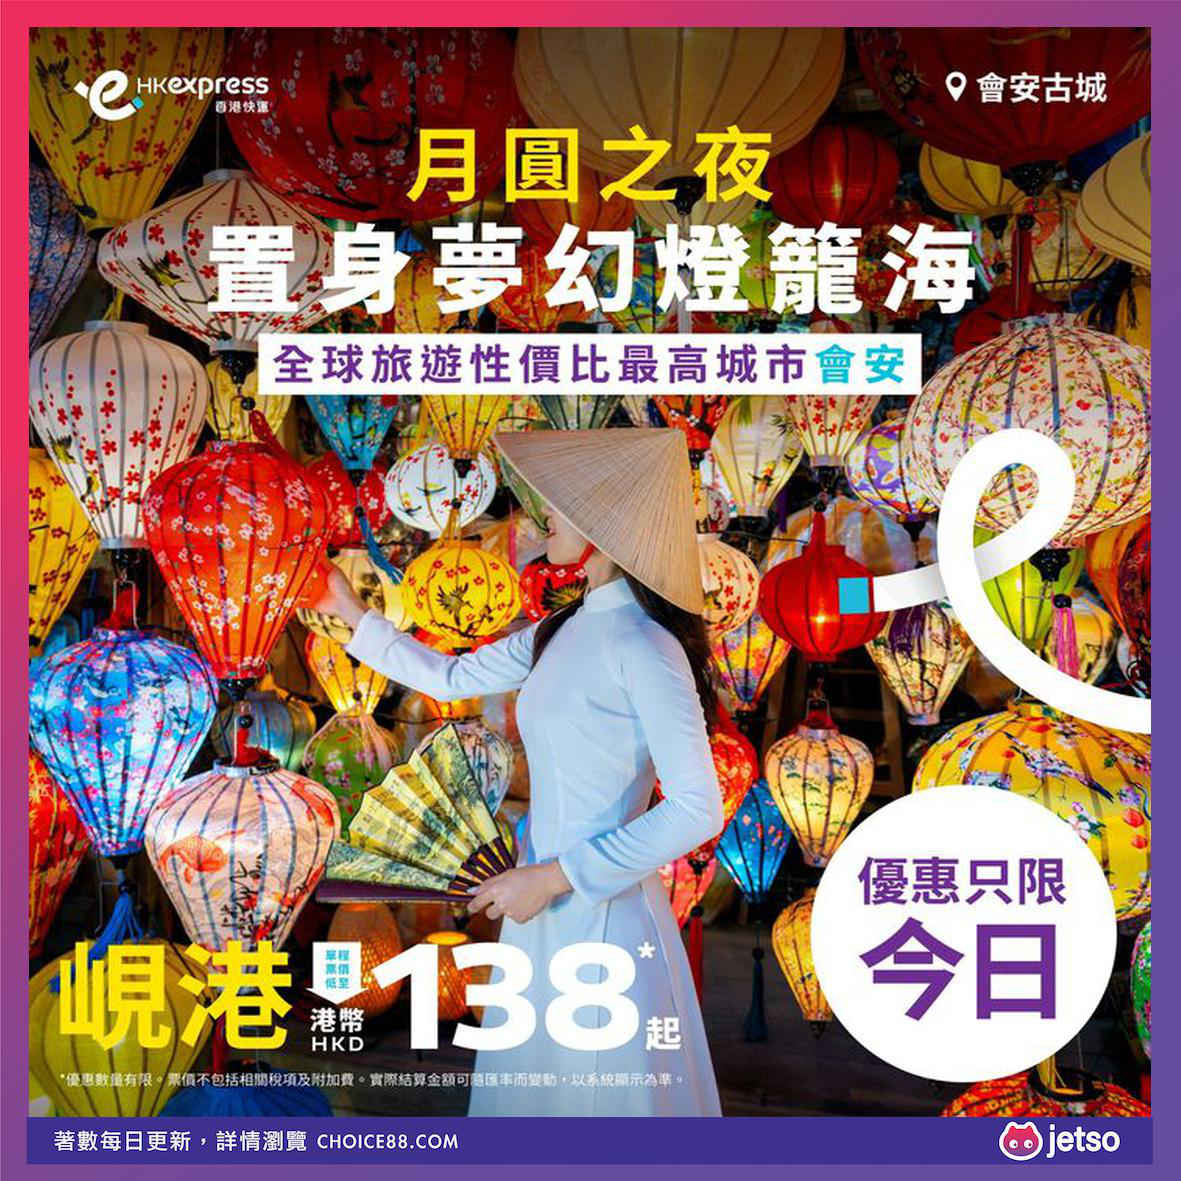 HK Express : [機票優惠]峴港單程票價低至 HKD 138